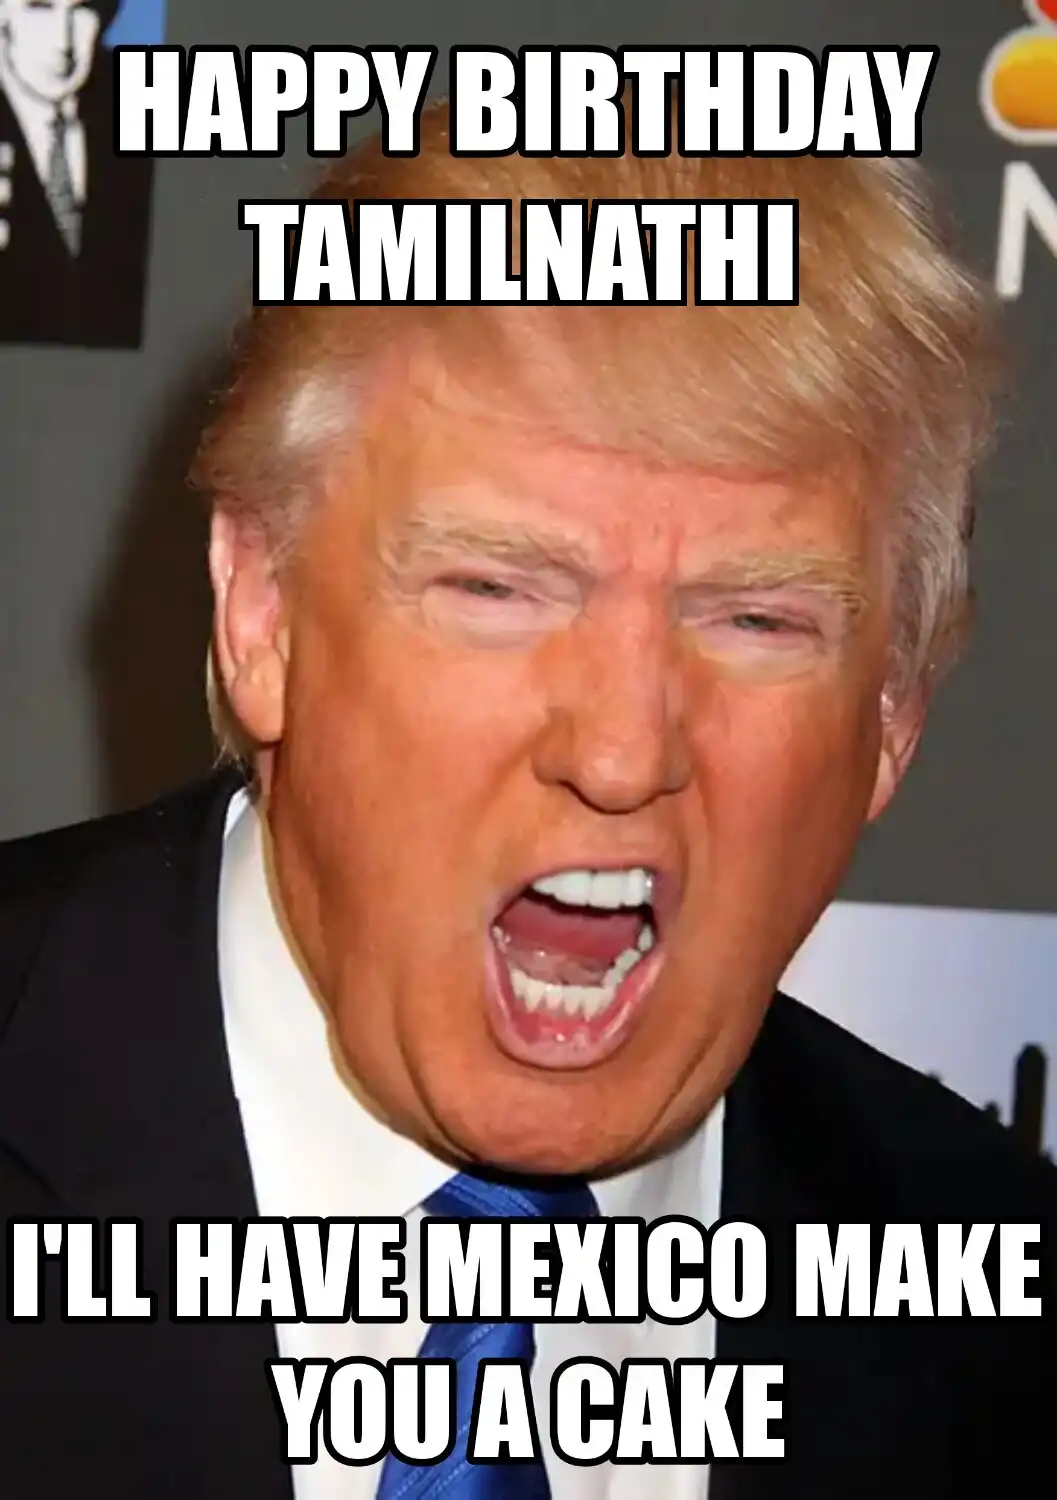 Happy Birthday Tamilnathi Mexico Make You A Cake Meme